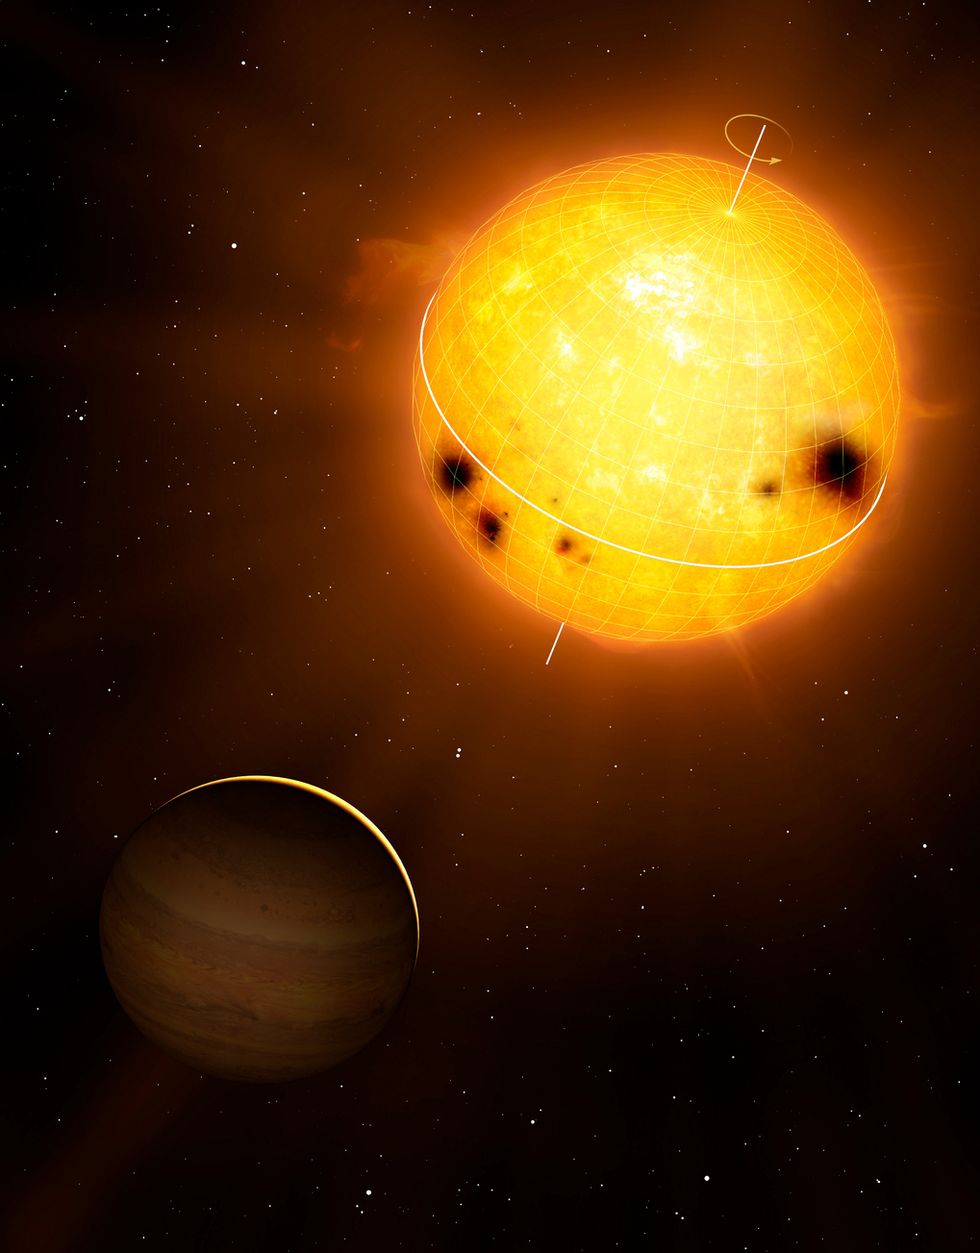 exoplanet-plato-esa.jpg